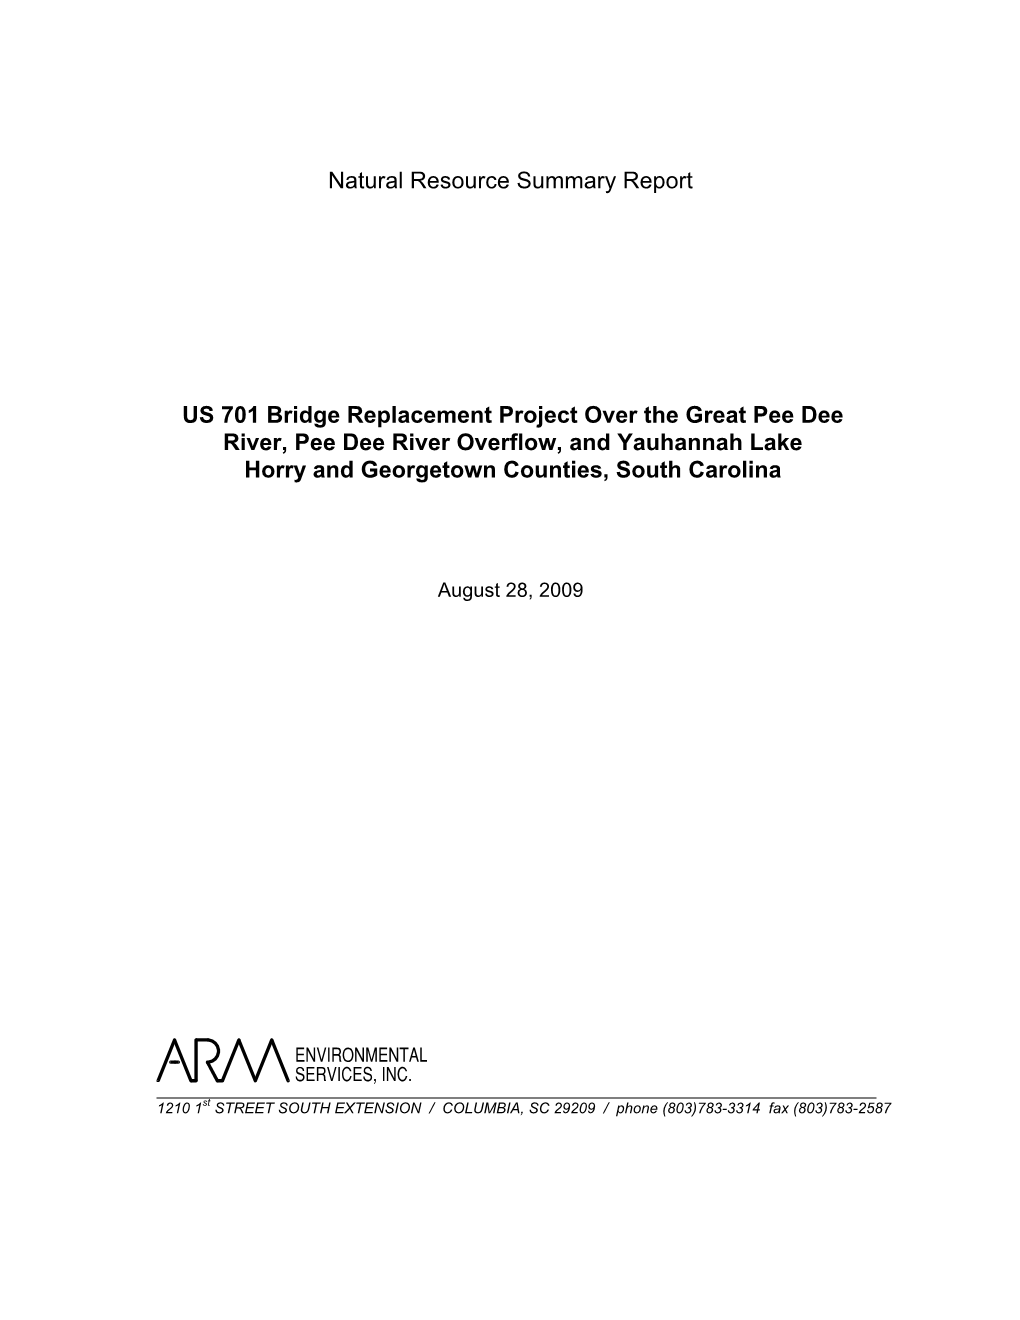 Natural Resources Report